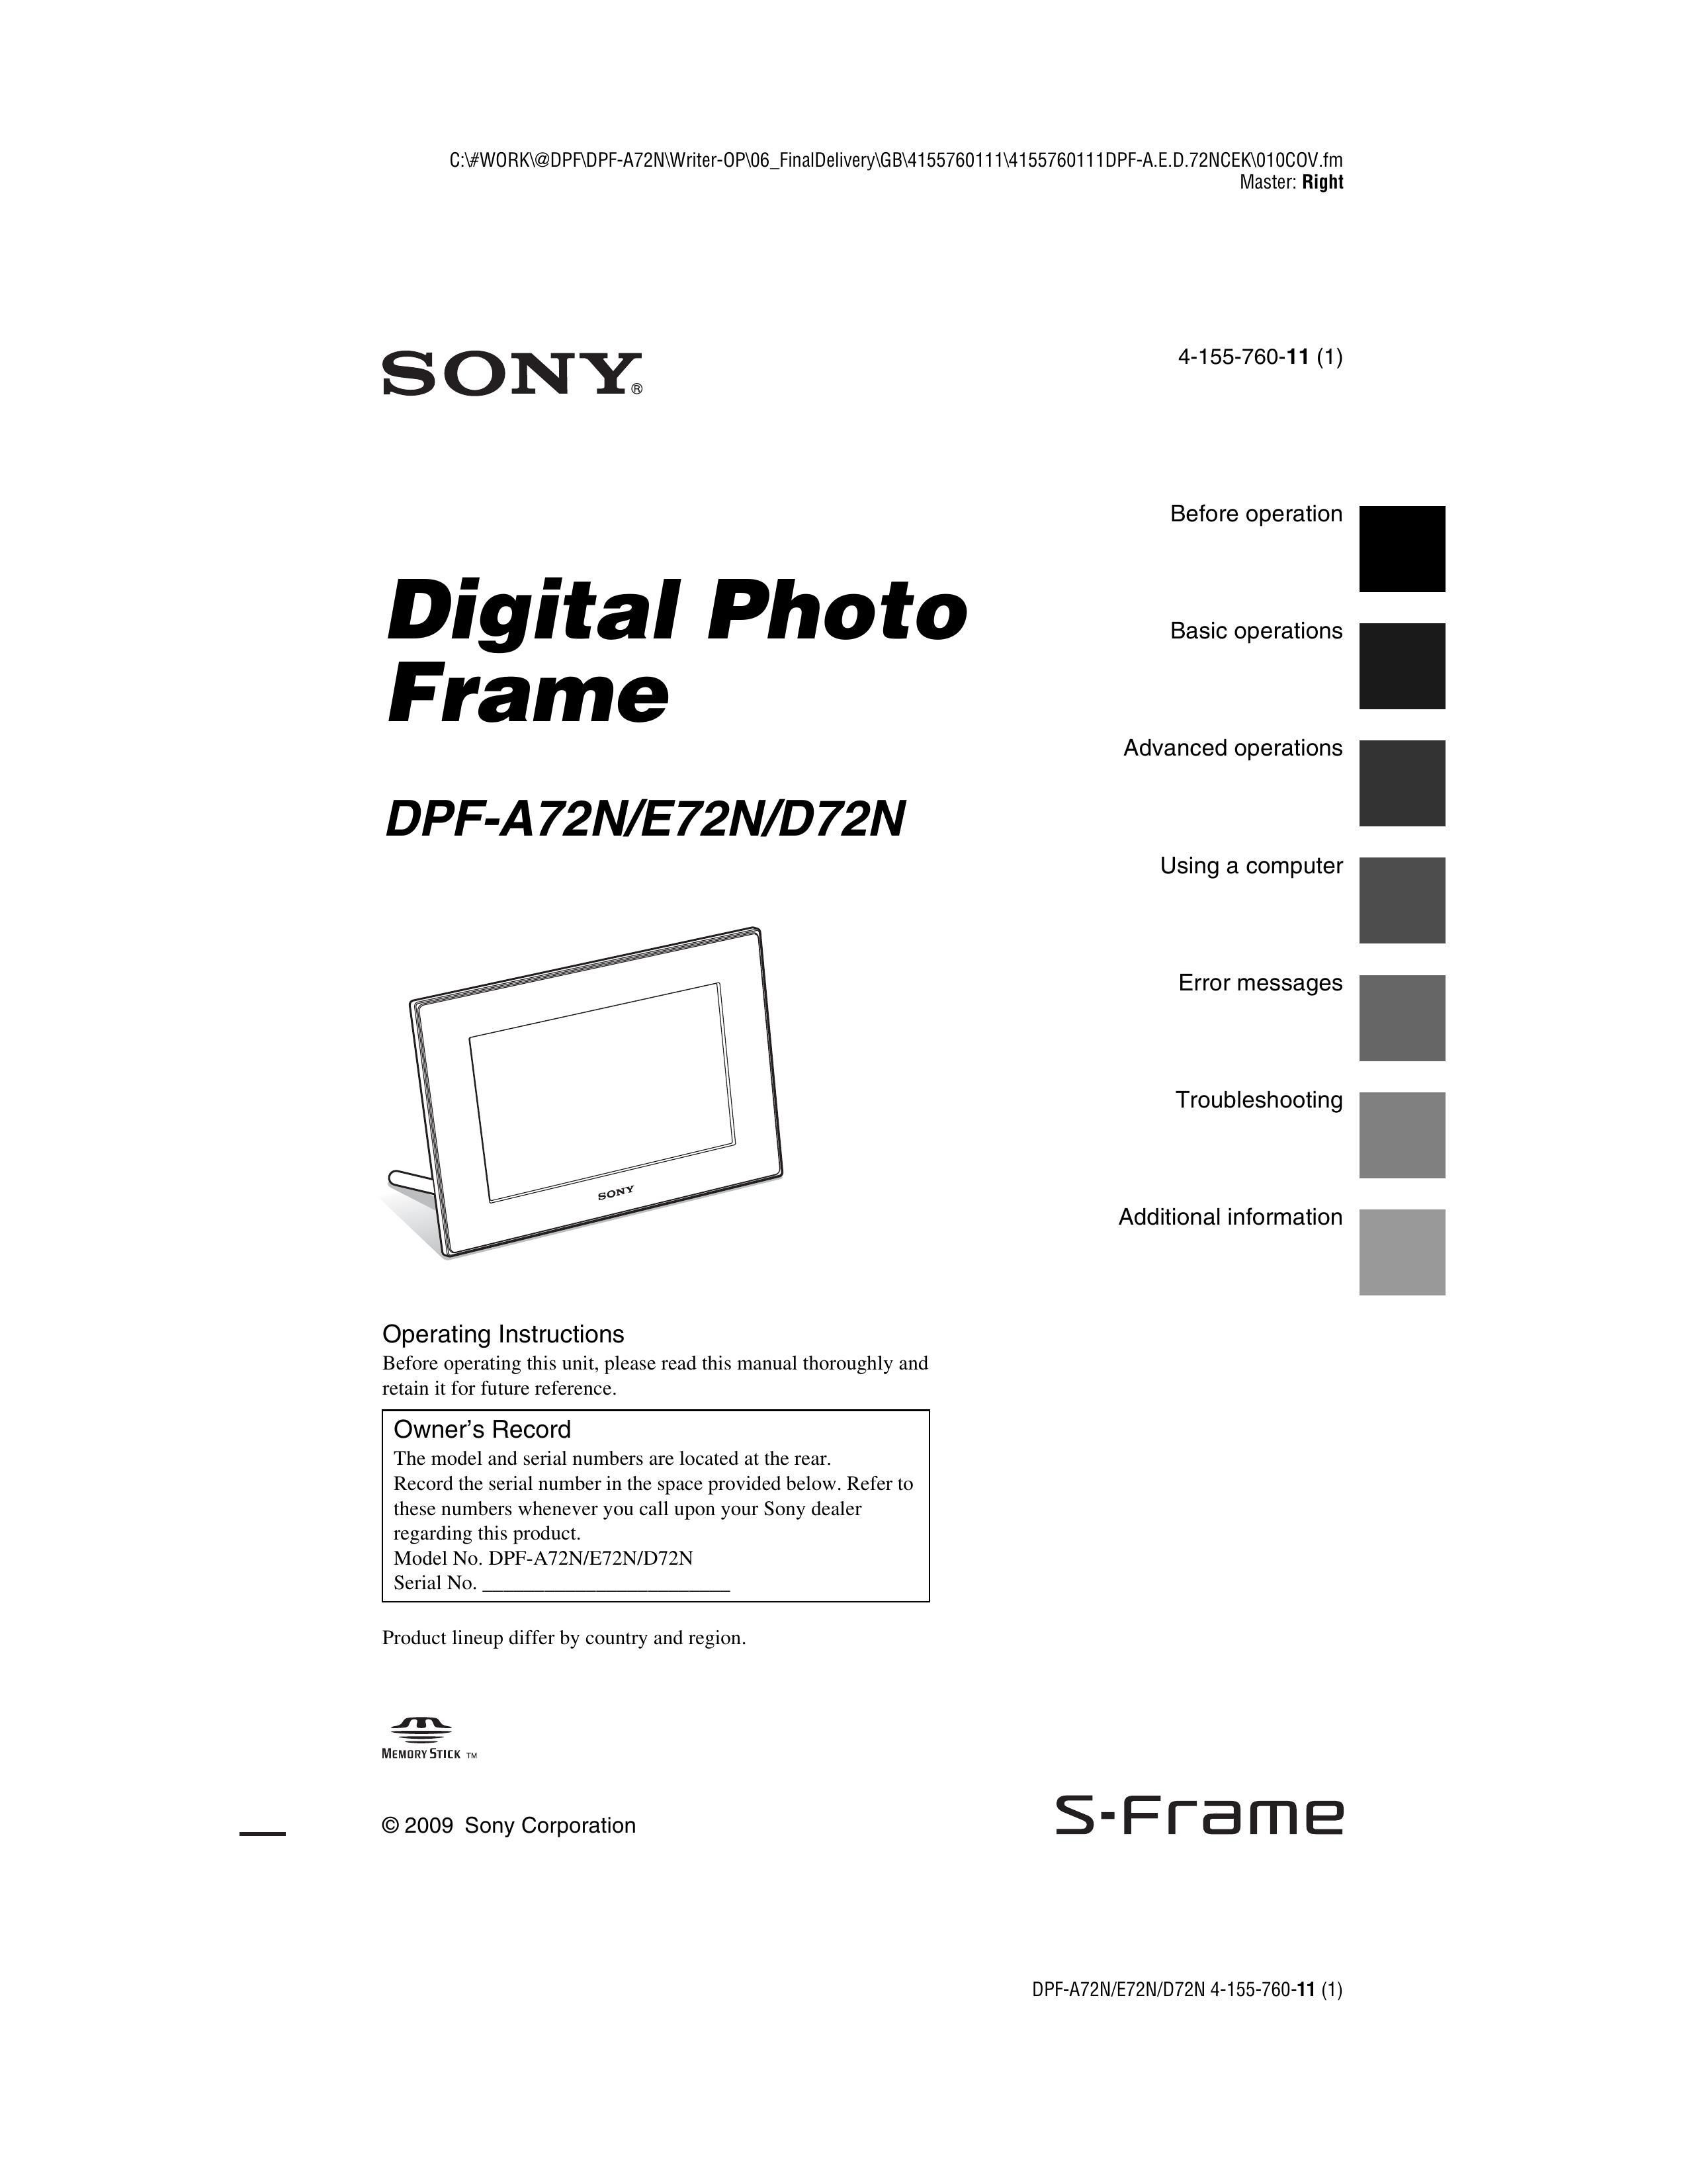 Sony 4-155-760-11 (1) Digital Photo Frame User Manual